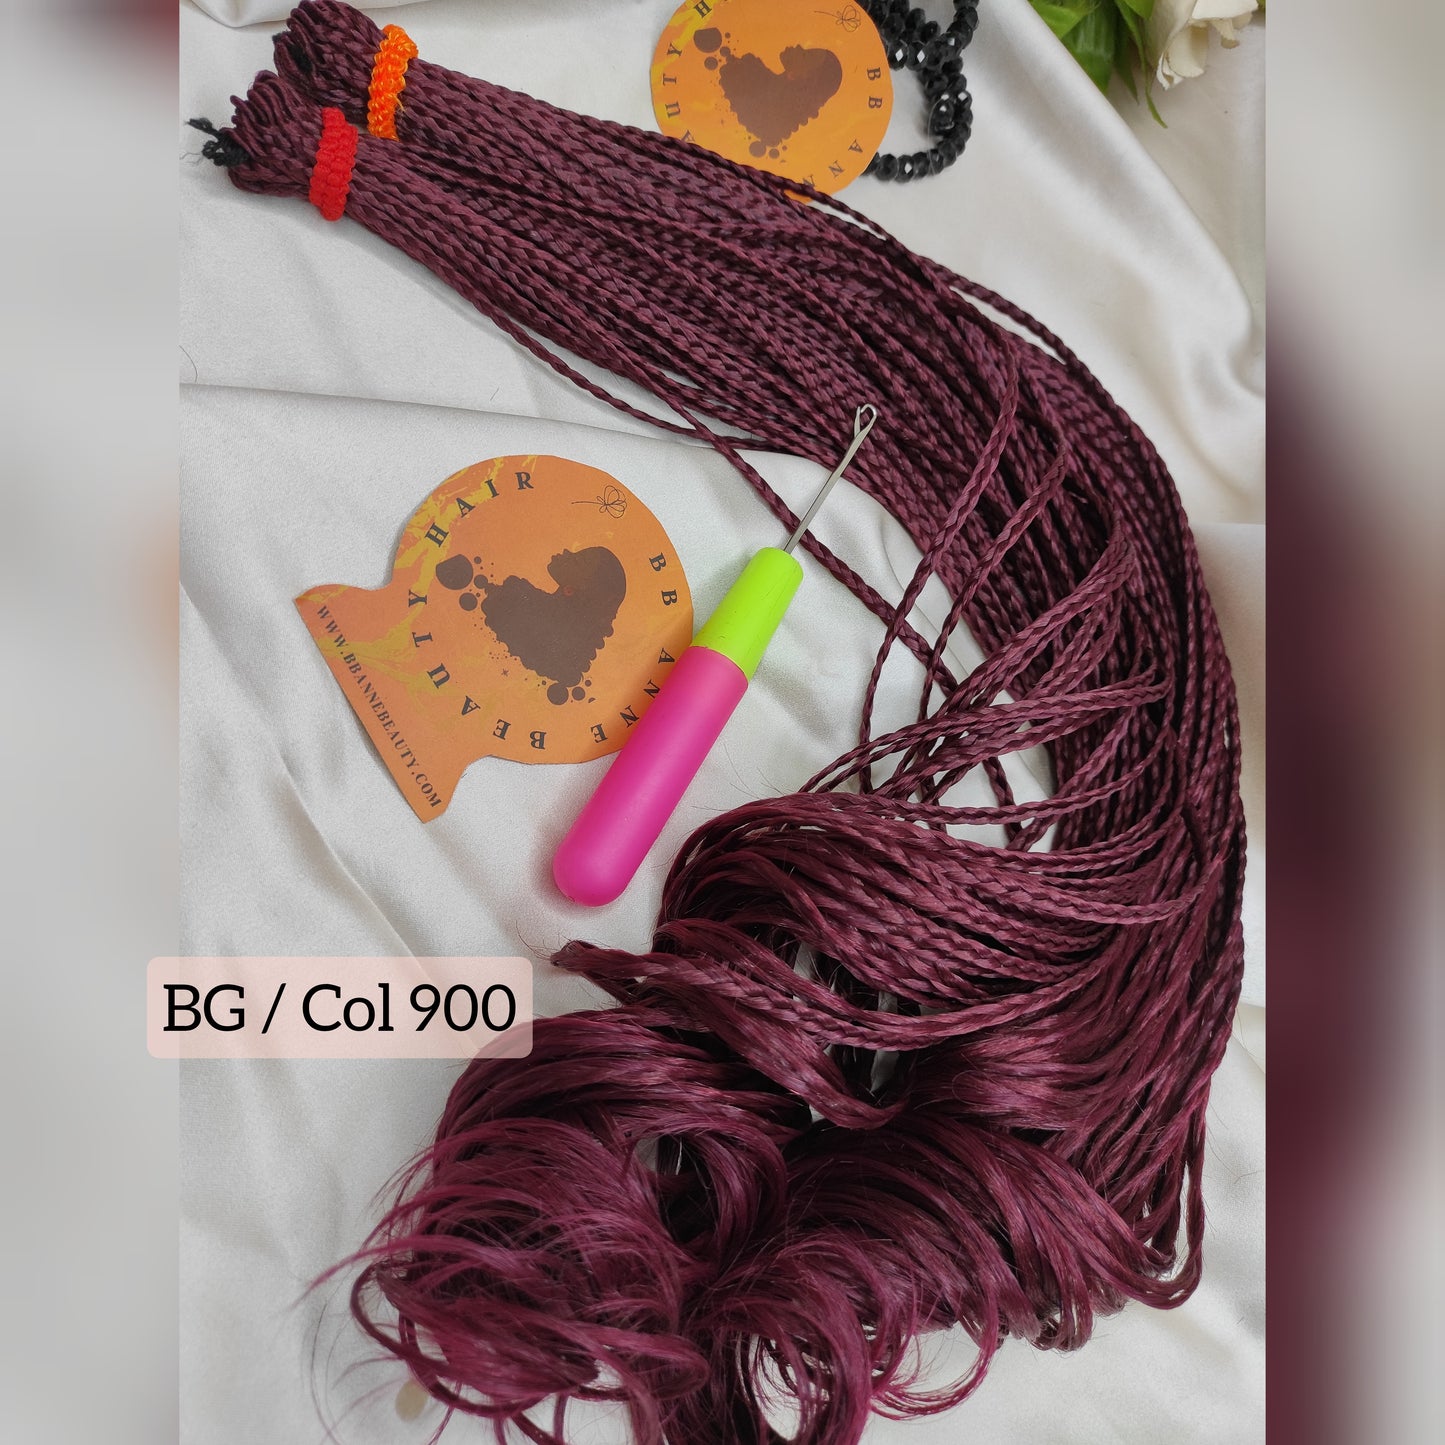 CURLY YAKI BRAIDS || Crochet Braids